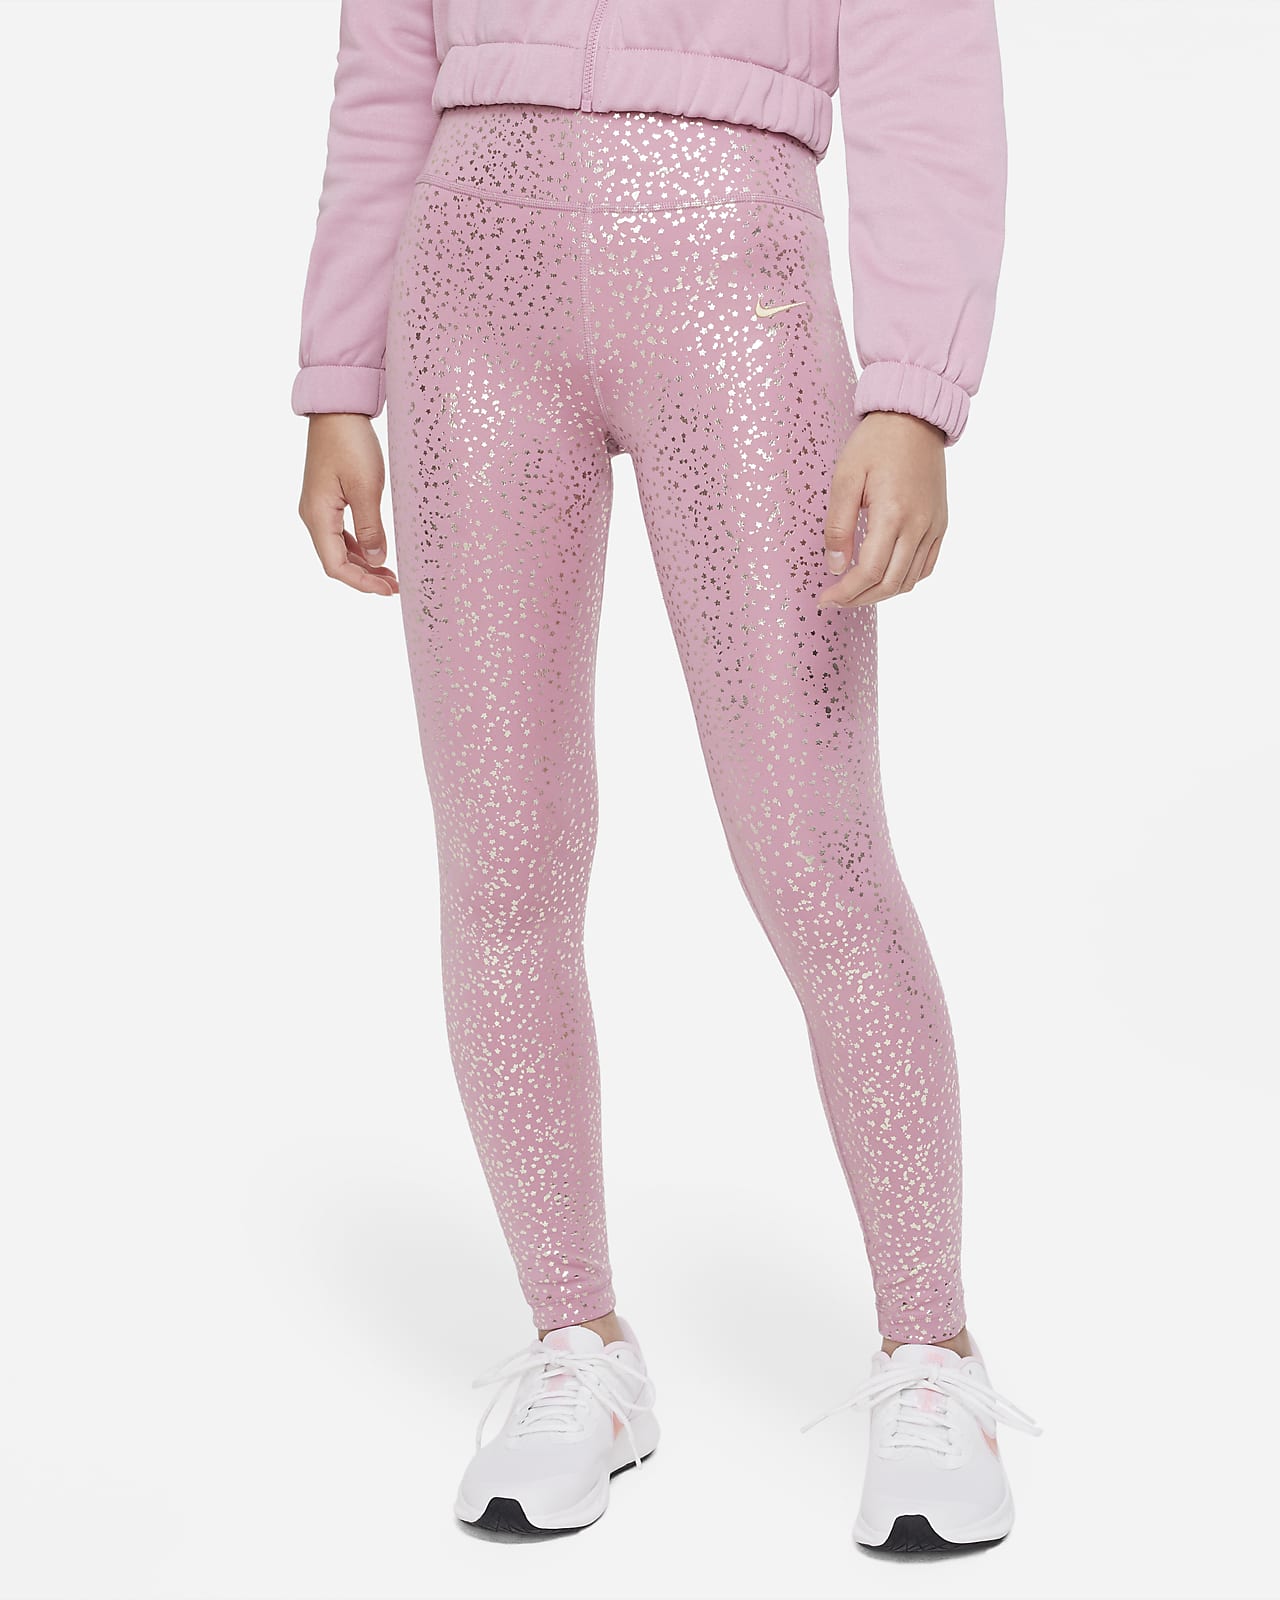 Nike Girls Dri-FIT AOP Leggings Pink/White XL